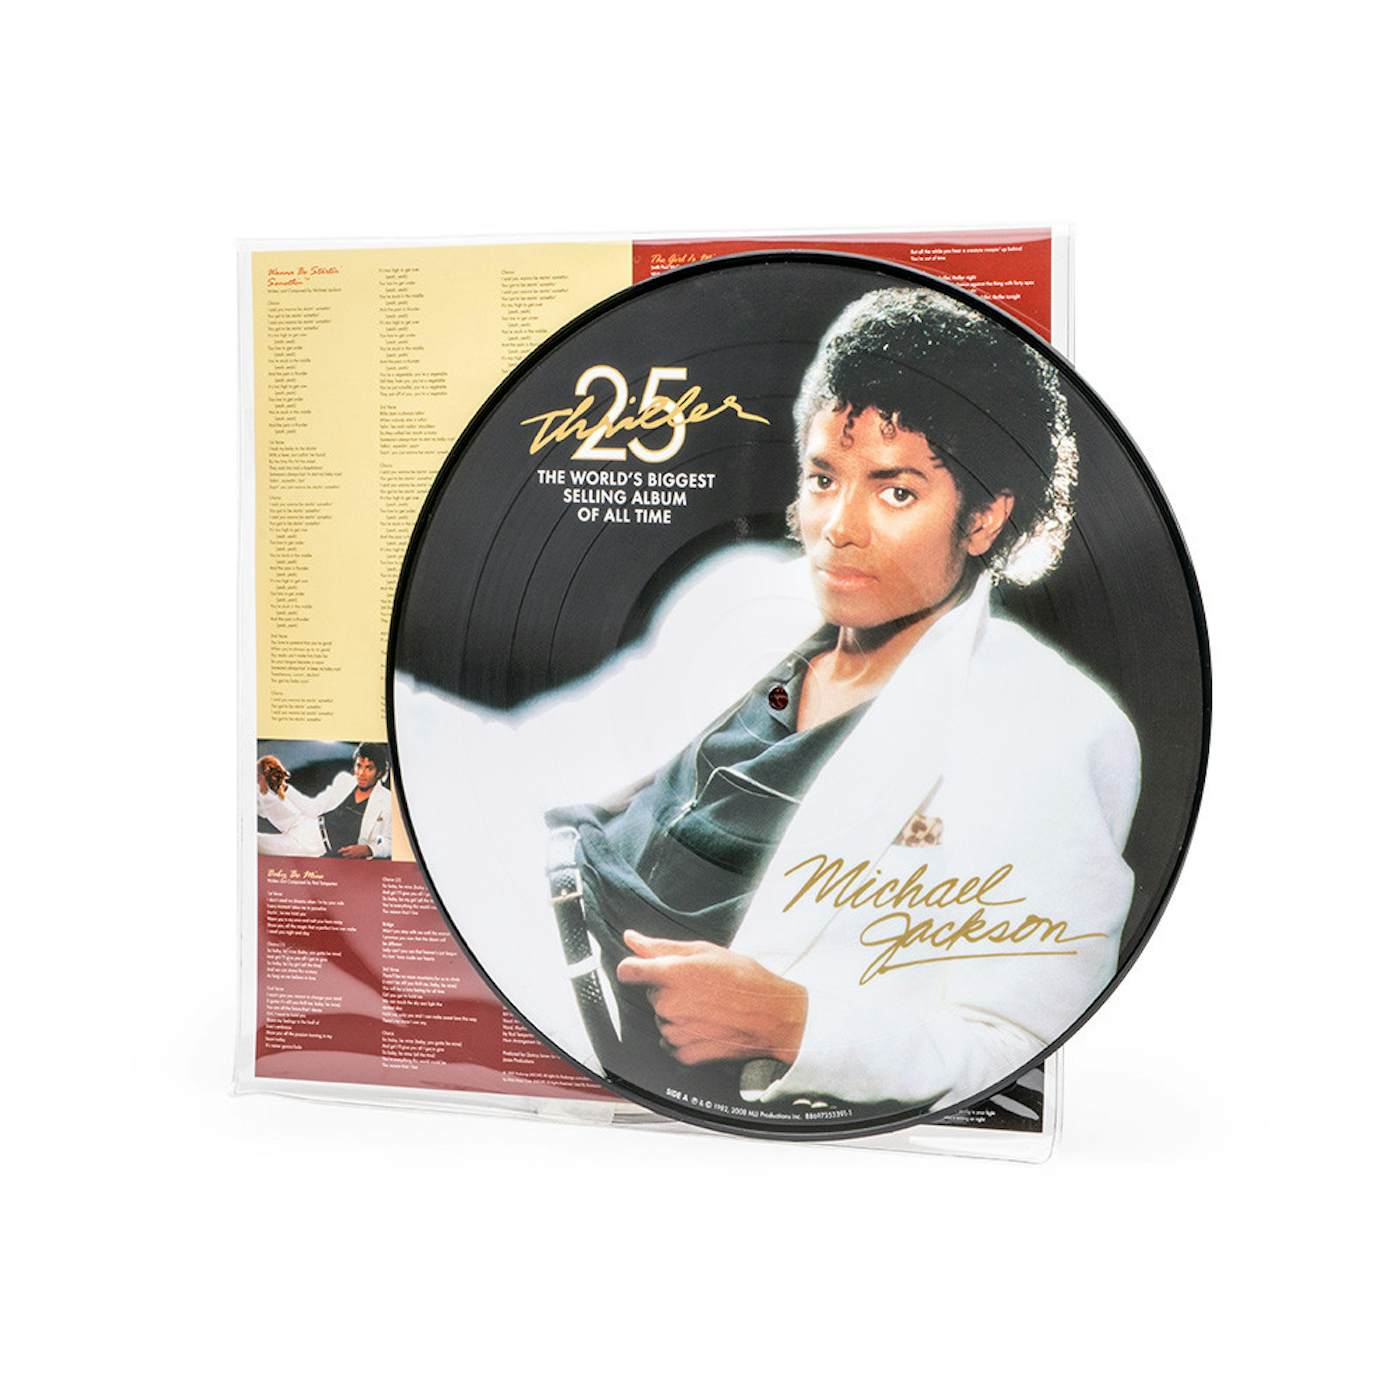 Bobby Jackson Store: Official Merch & Vinyl